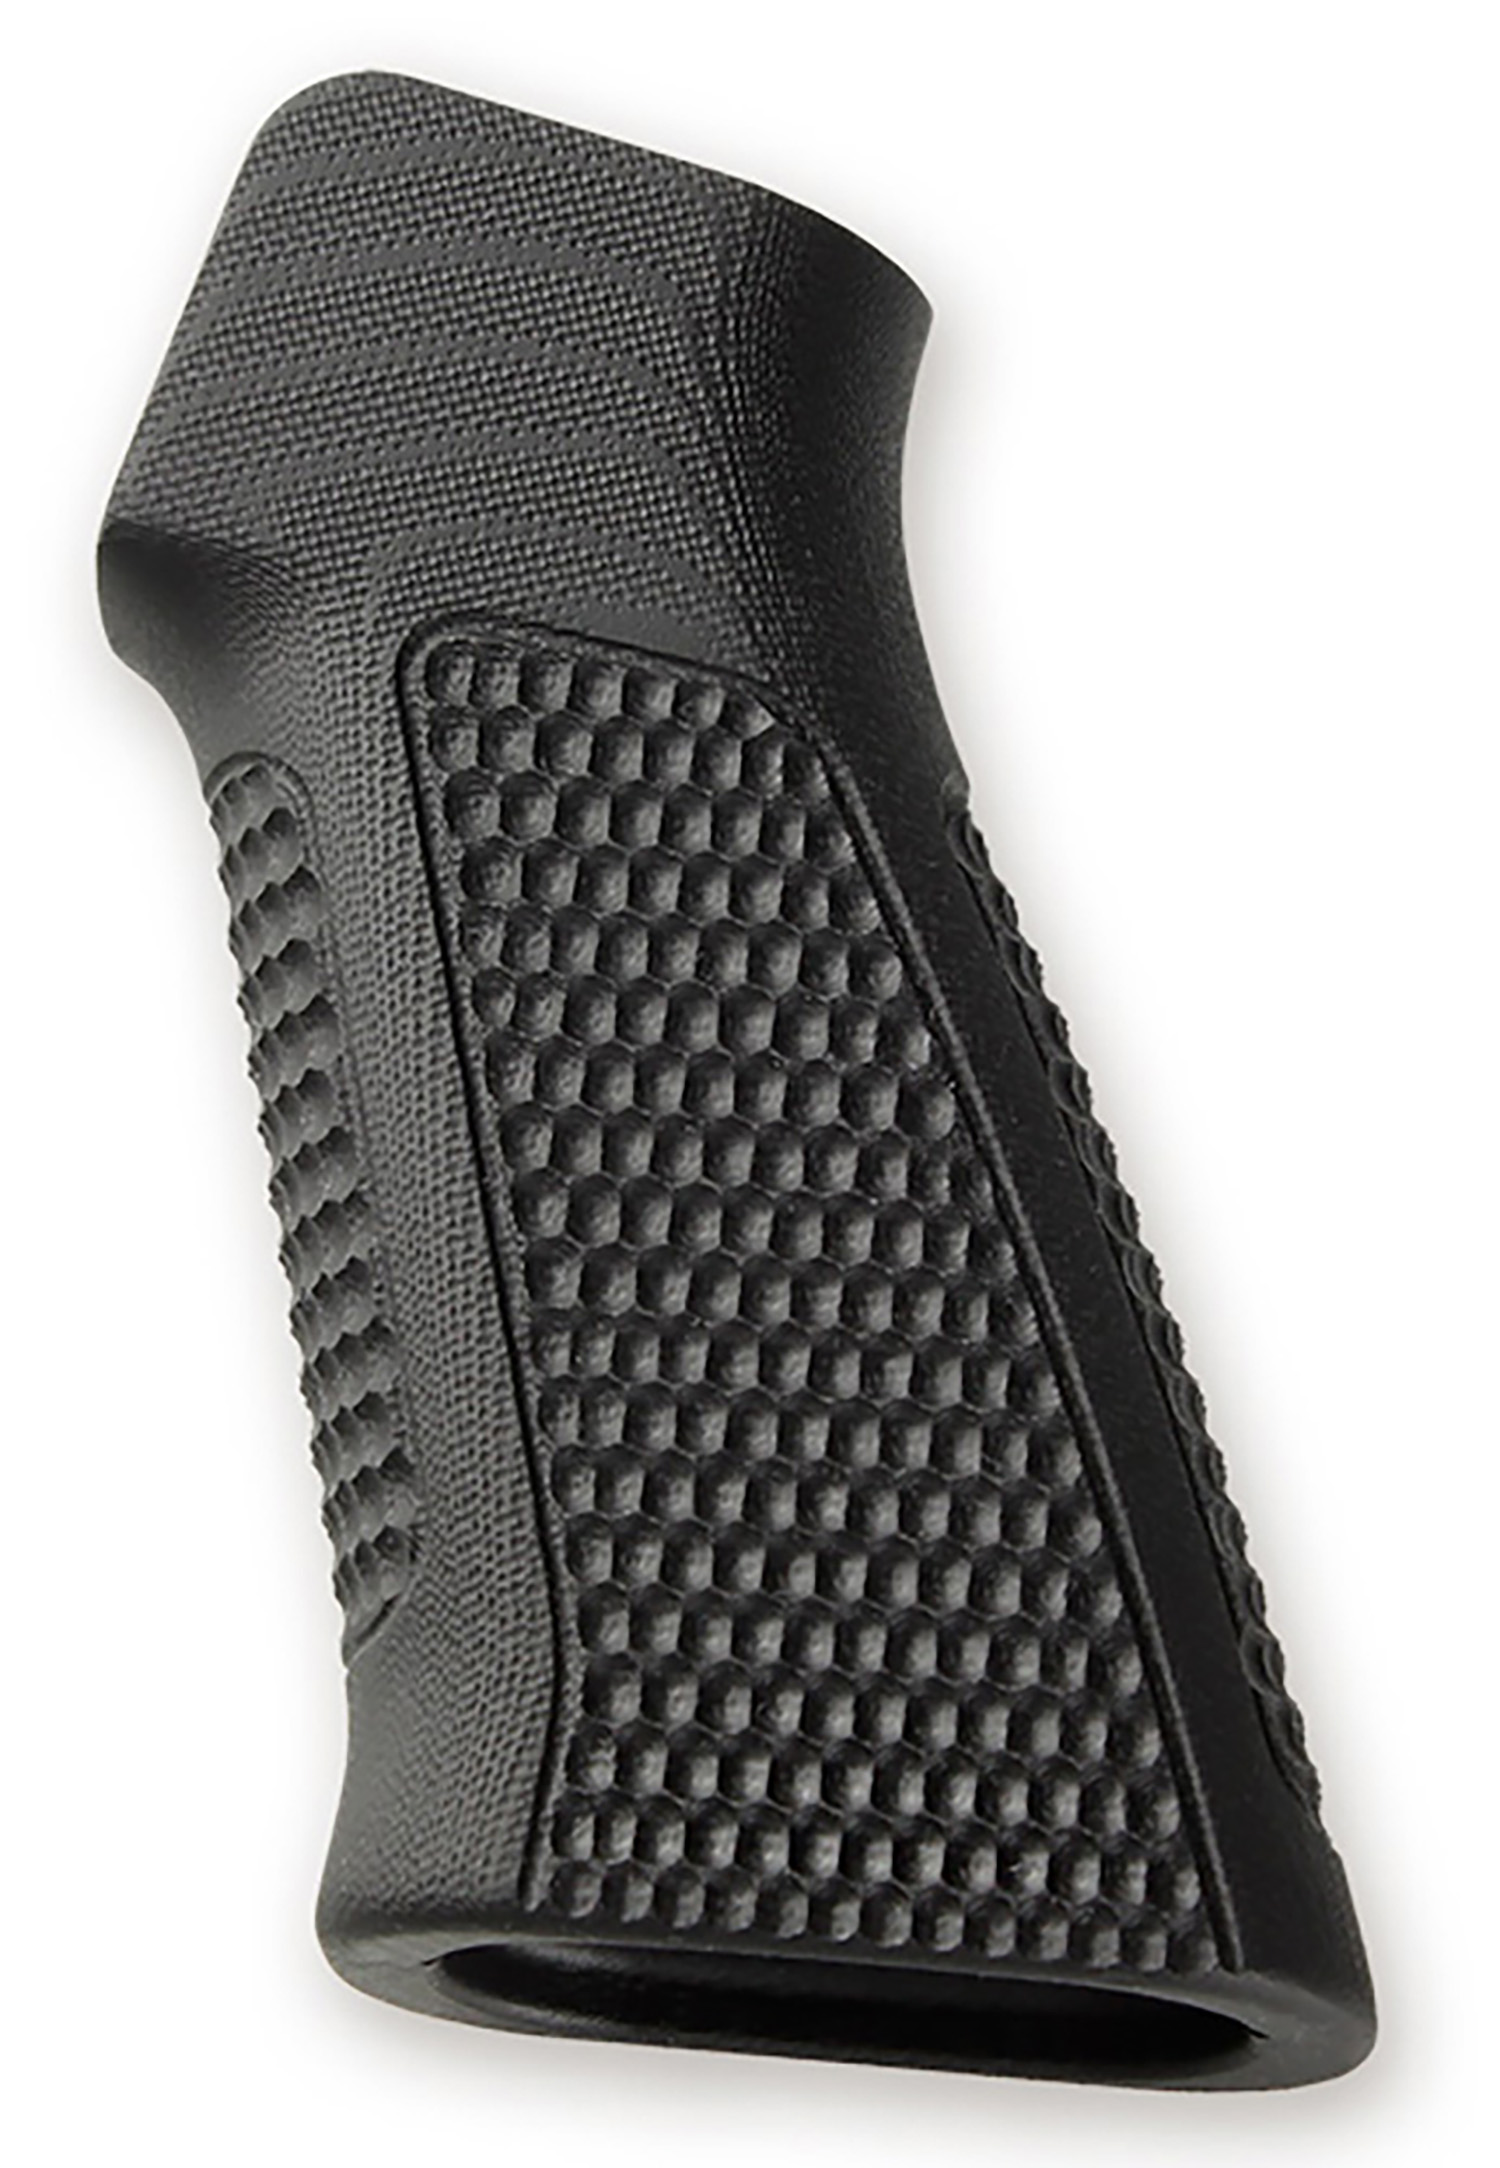 Hogue 13139 Piranha AR Pistol Grip Made of G10 With Black Checkered Finish for AR-15, M16